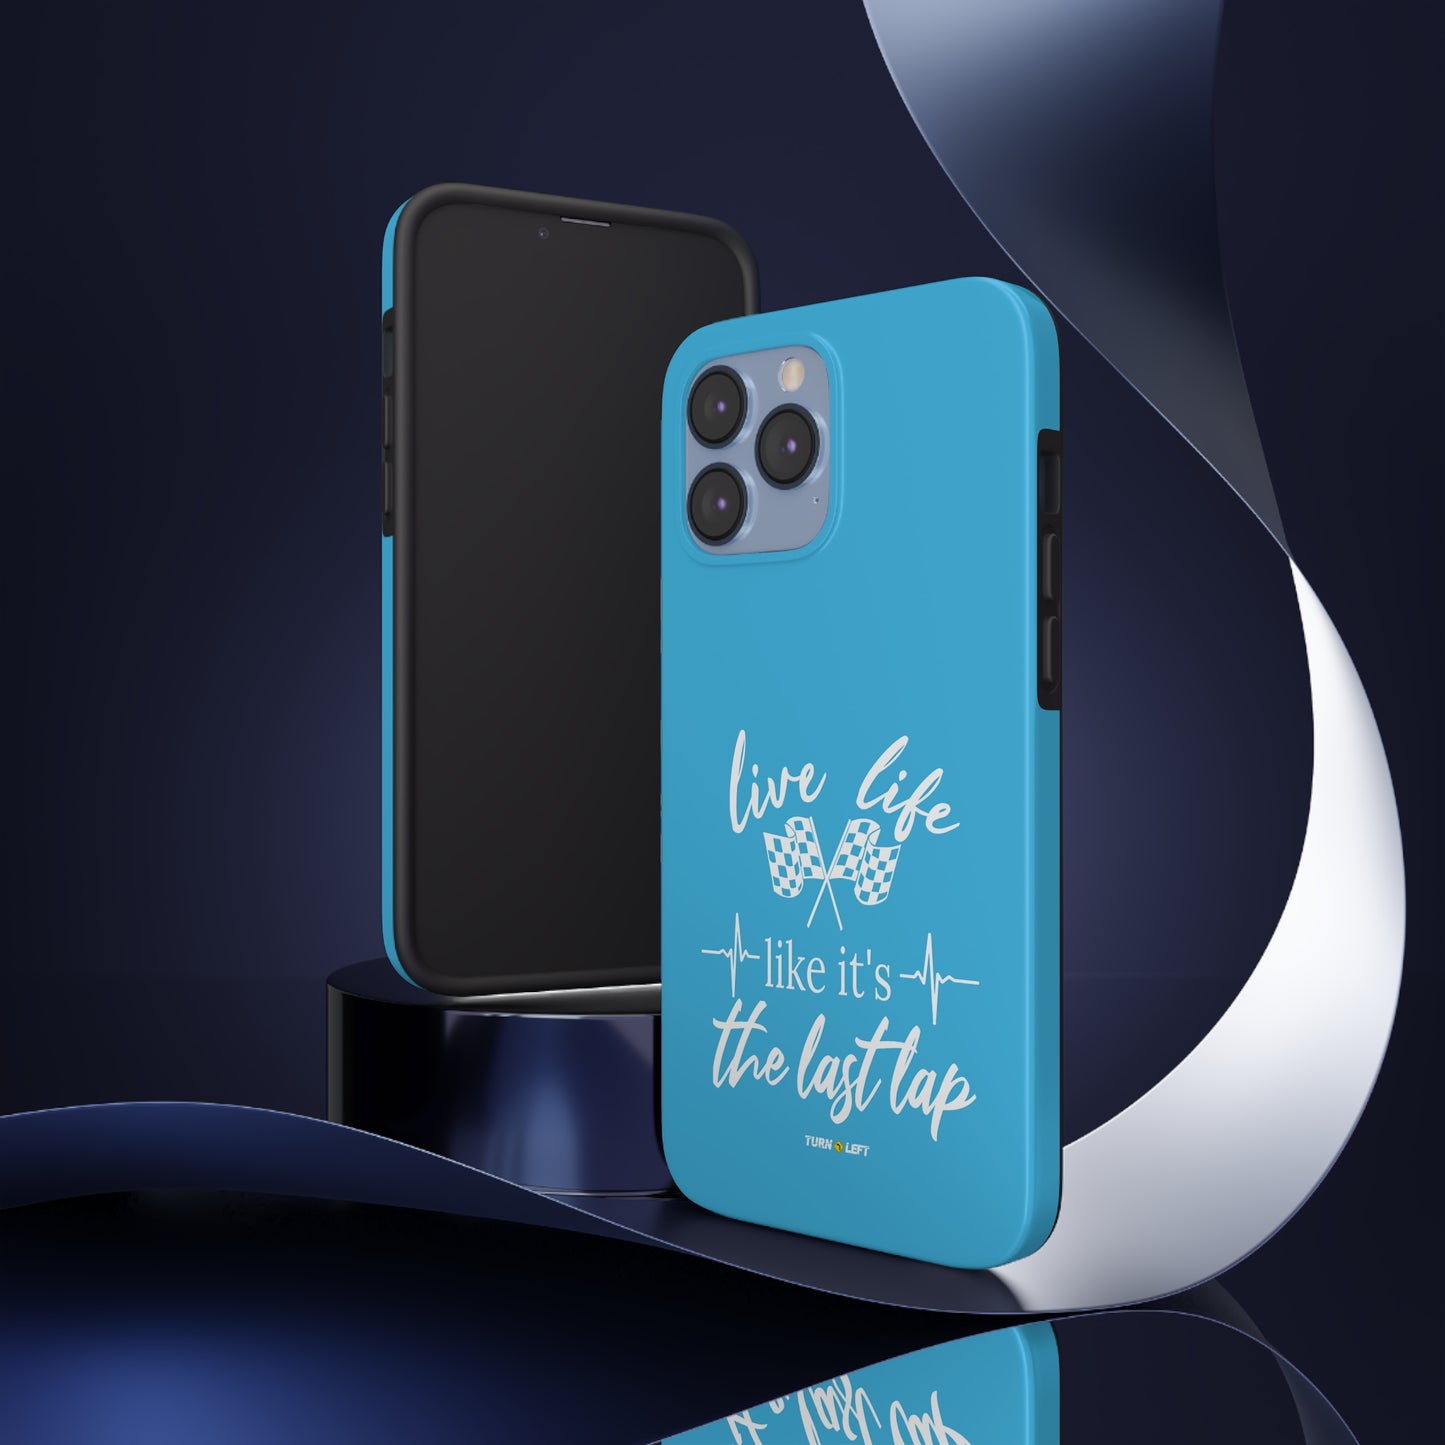 Live Life Like It's The Last Lap Blue Tough Phone Cases